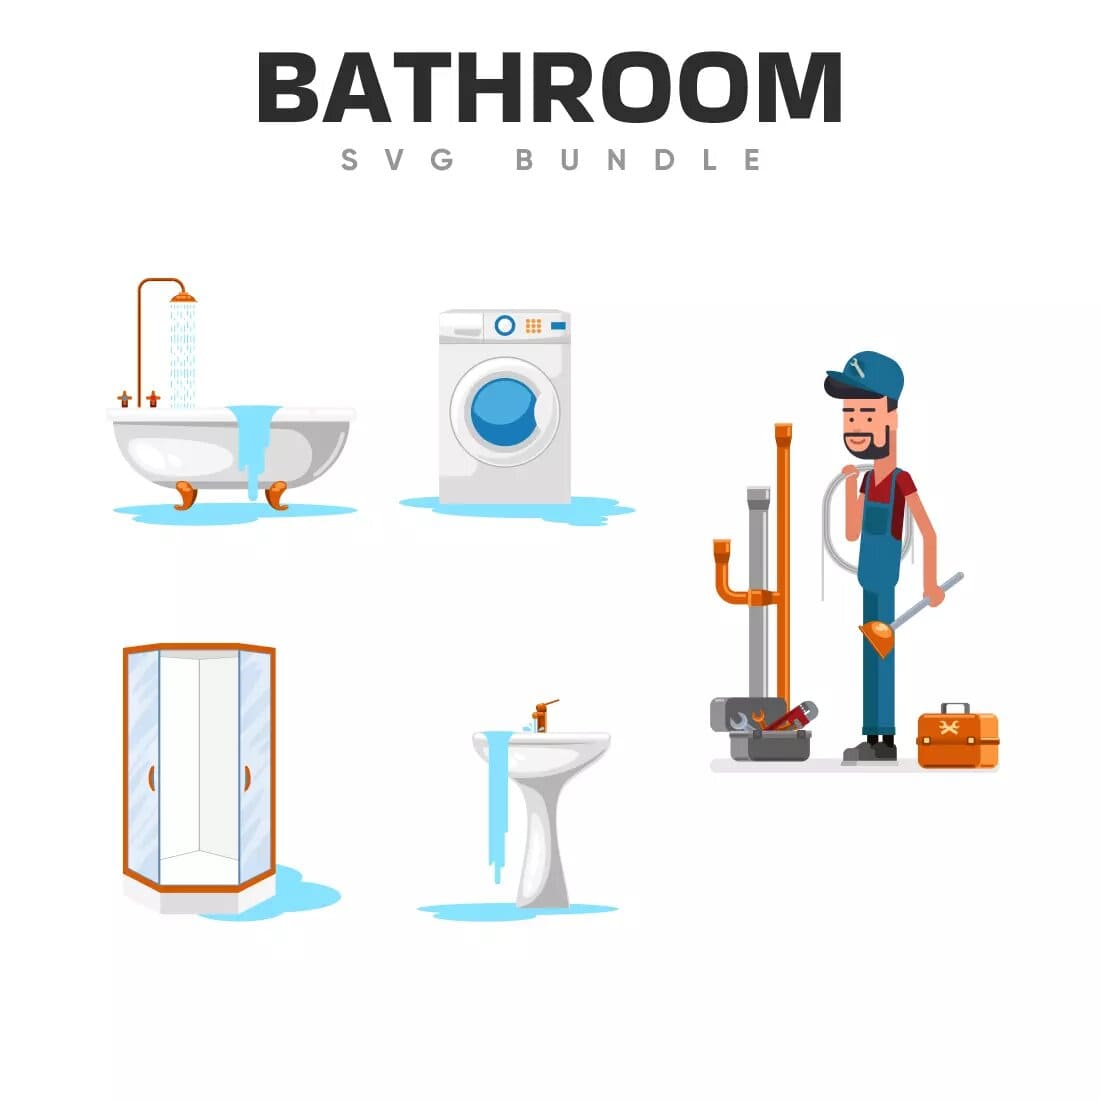 Extensive Bathroom SVG Bundle Preview 7.